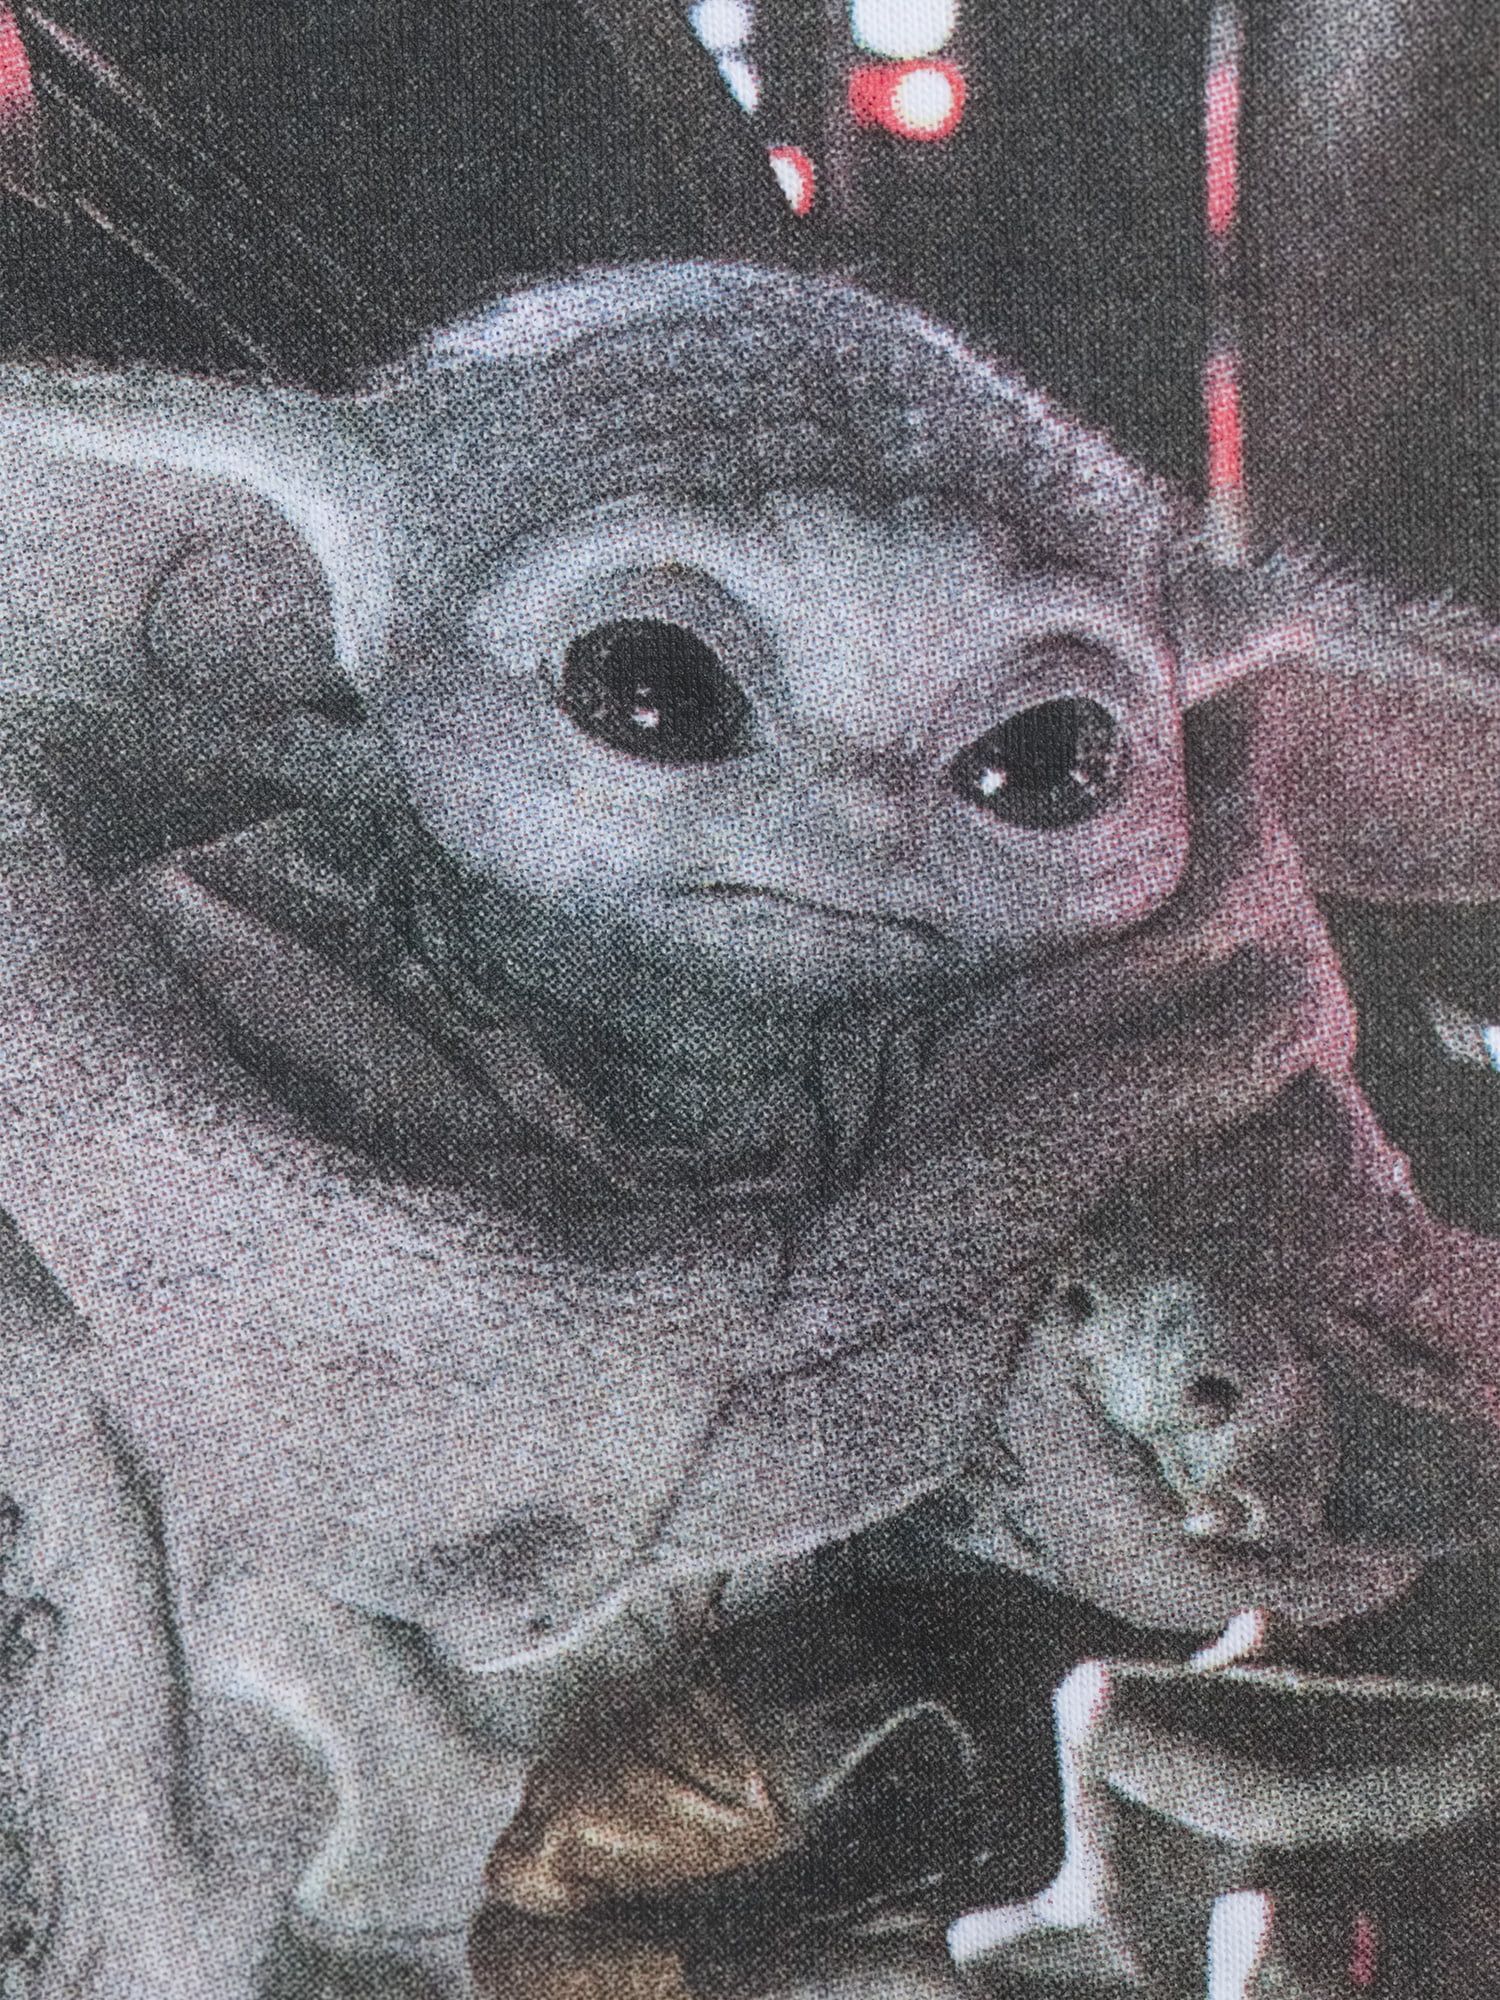 The Child (Baby Yoda) and Grogu in a Star Wars: The Mandalorian t-shirt. - Baby Yoda